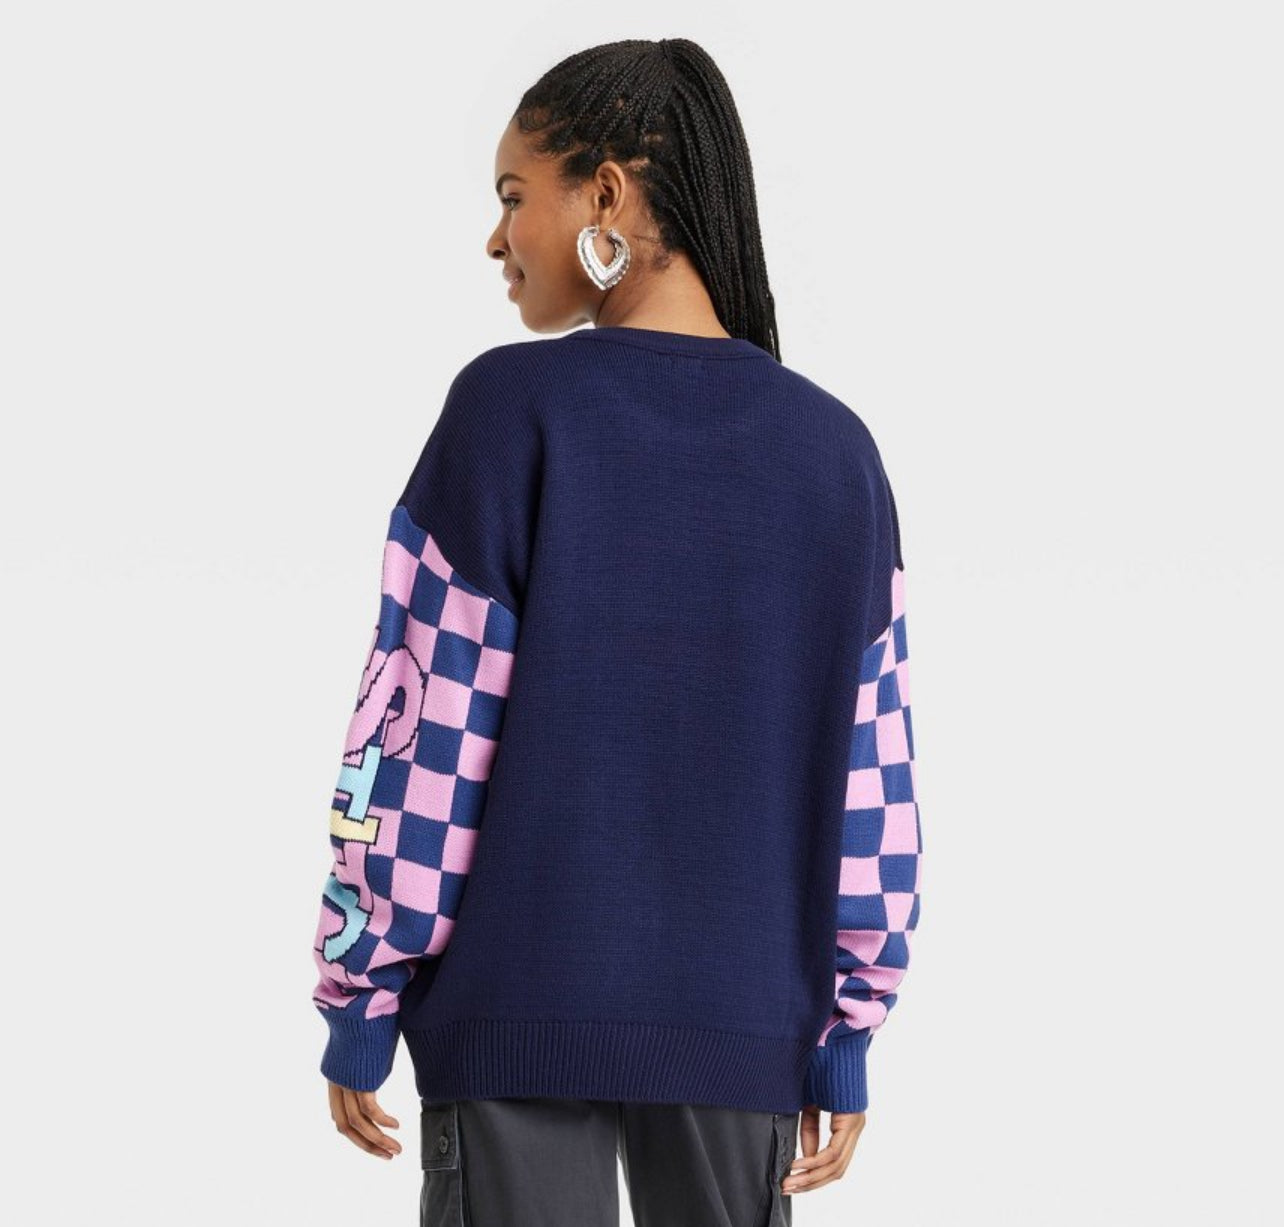 Women's Disney X Skinnydip Stitch Knitted Graphic Sweater